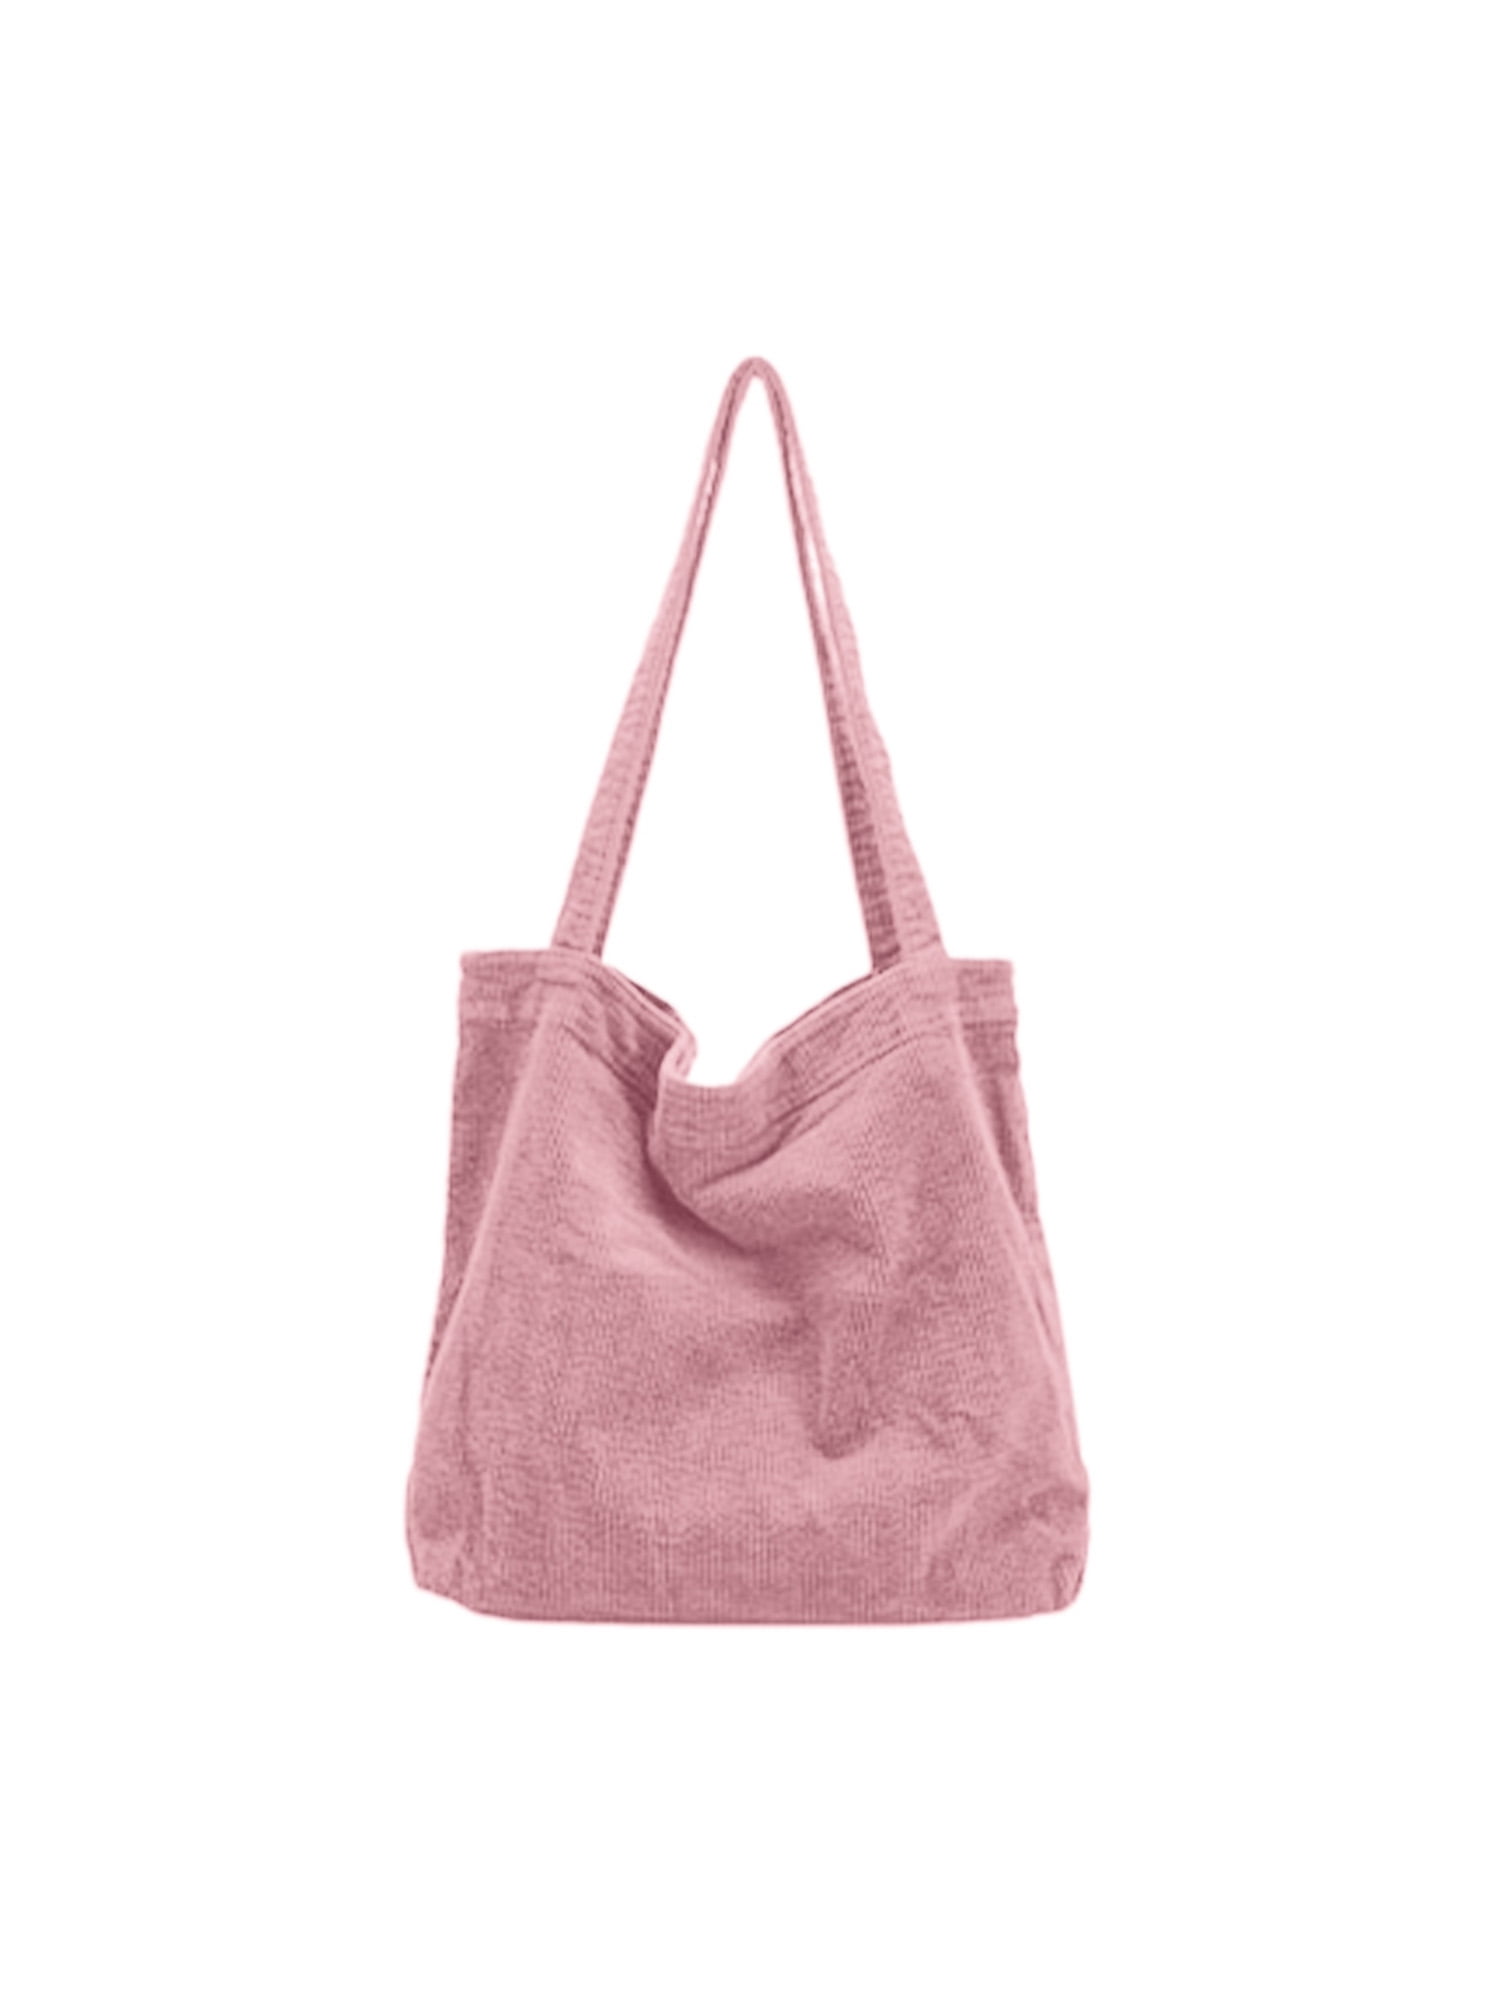 Avamo Ladies Shoulder Bag Corduroy Handbag Large Capacity Tote Bags ...